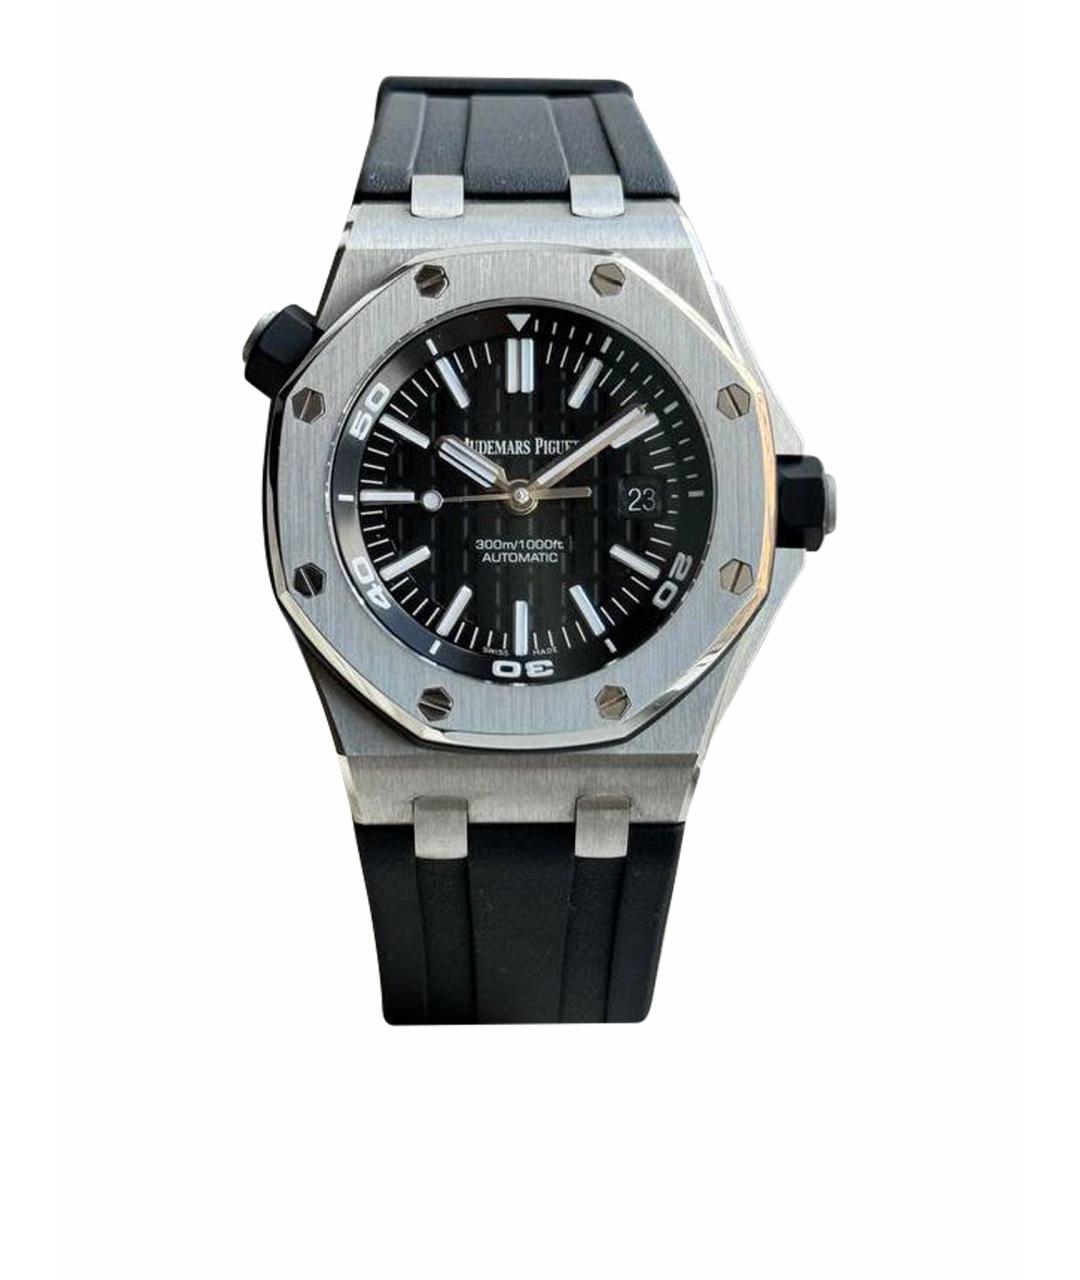 Audemars Piguet Черные металлические часы, фото 1